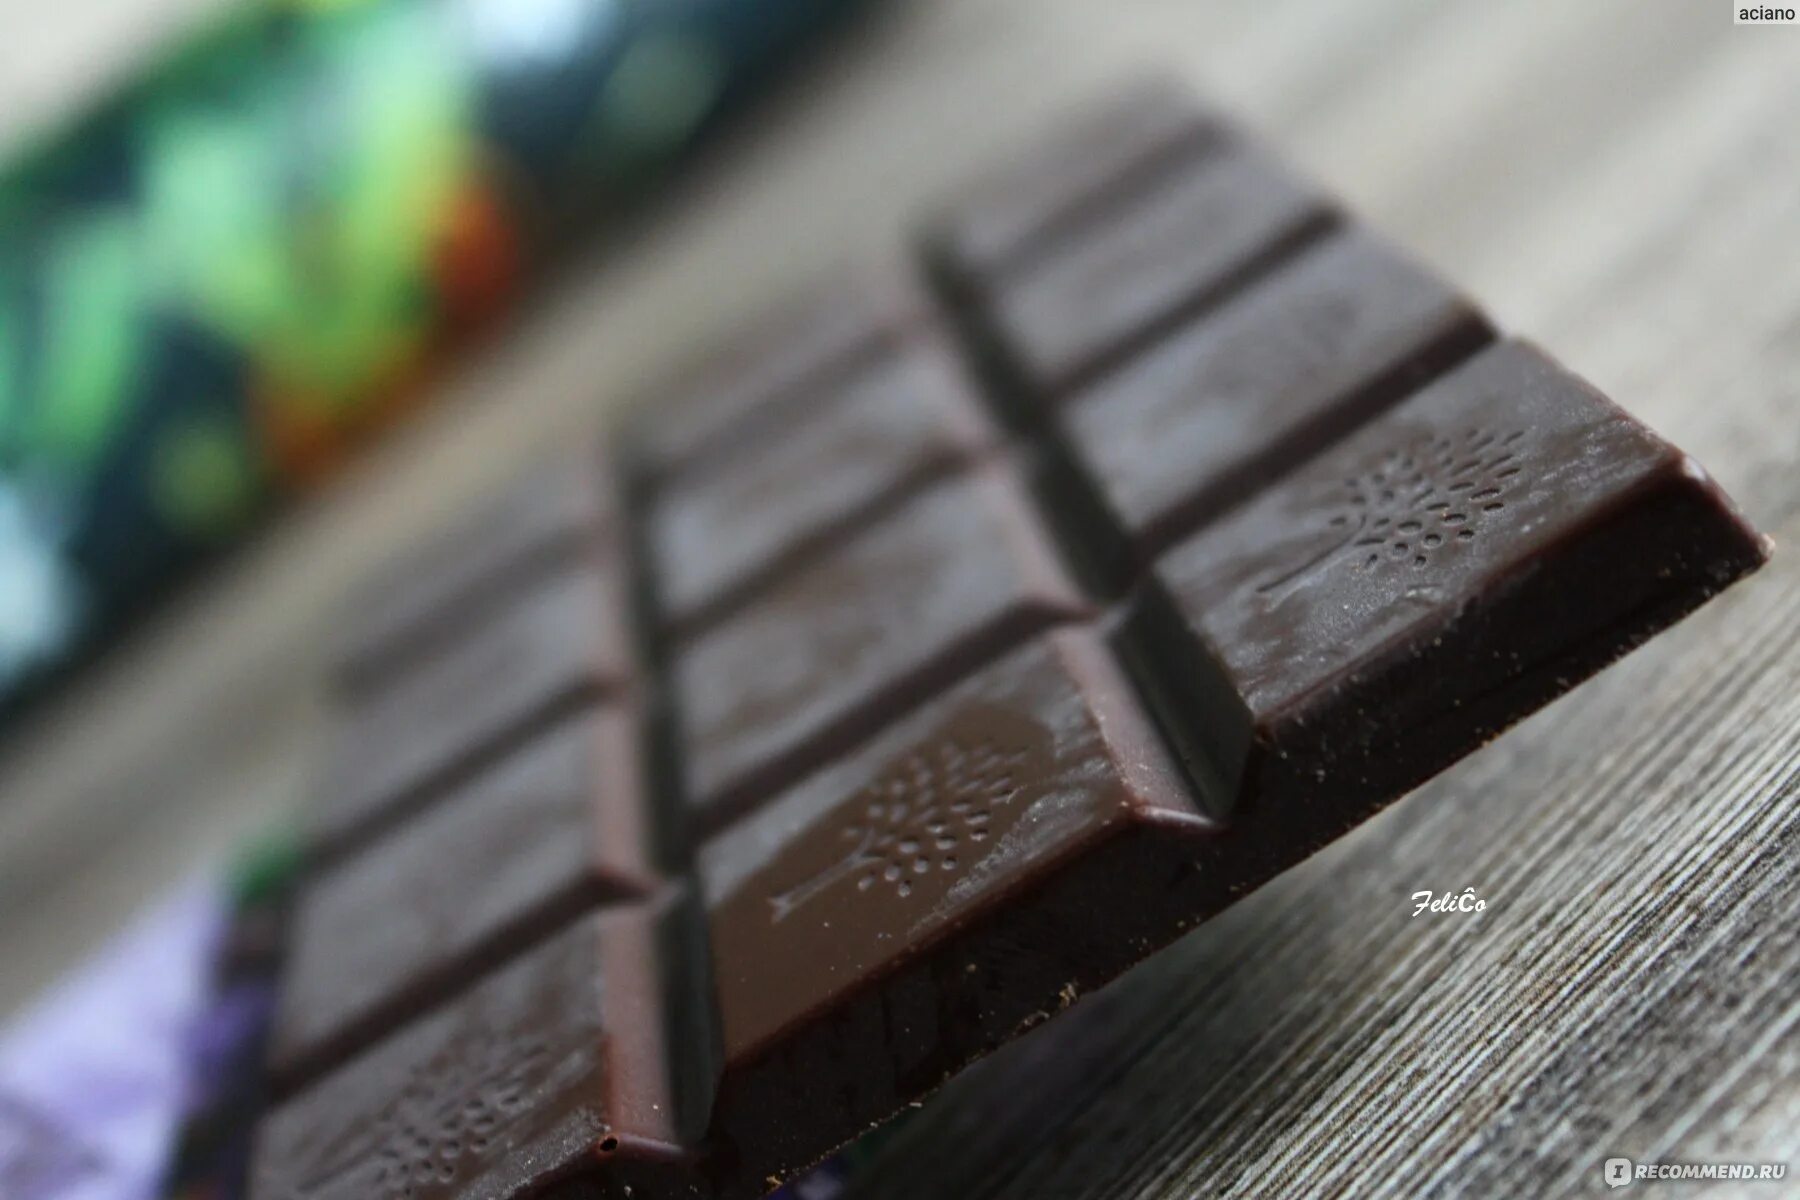 Метлицкая Горький шоколад. Шоколад Горький. Горький шоколад картинки. Горький шоколад 85%. Успенская горький шоколад